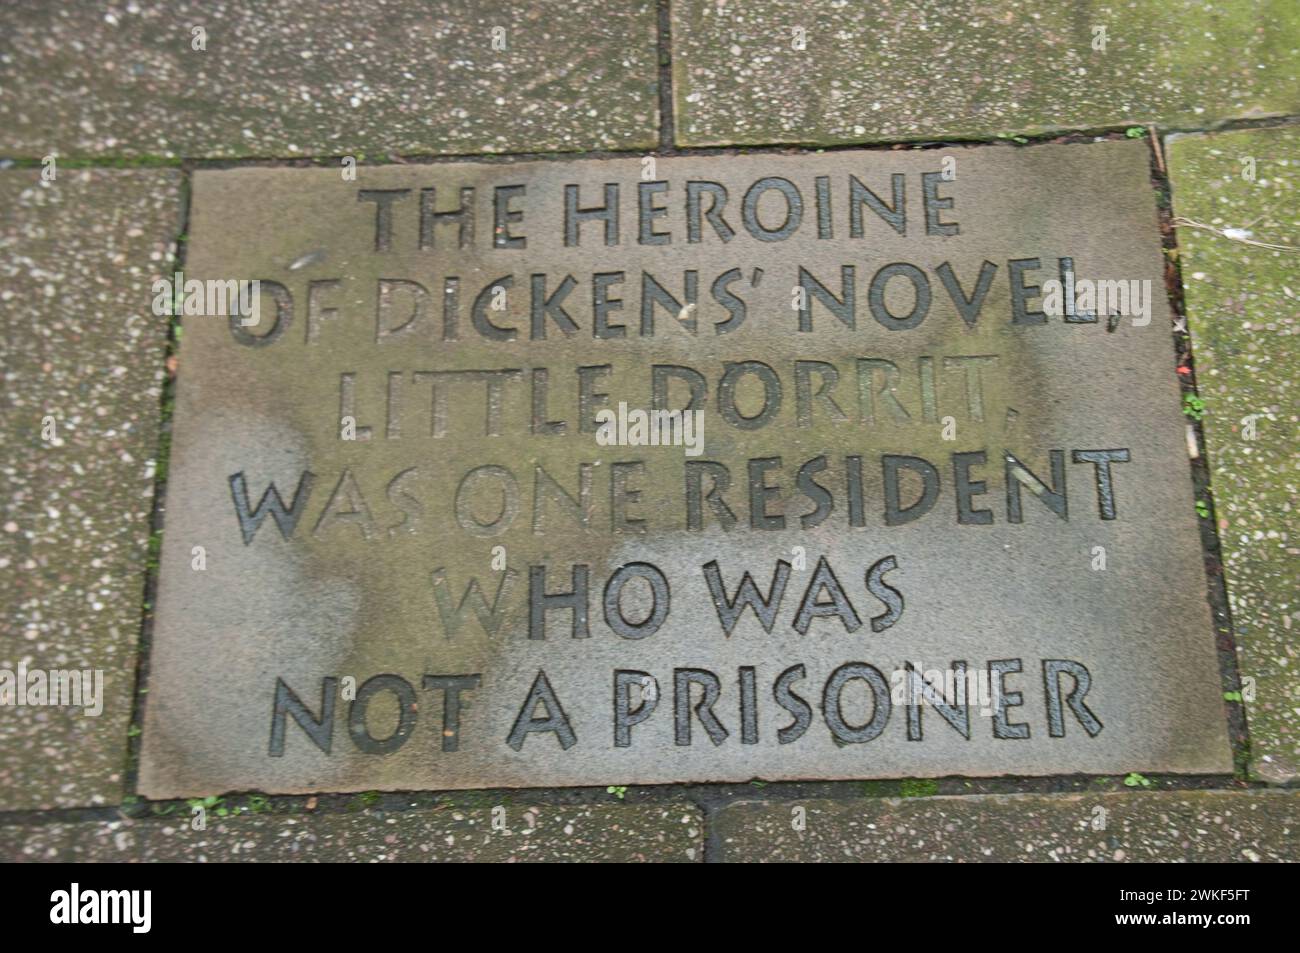 Sign indicating that Little Dorrit's heroine (Amy Dorrit) was not a prisoner although a resident at Marshalsea Debtors' Prison, Southwark, London, UK Stock Photo